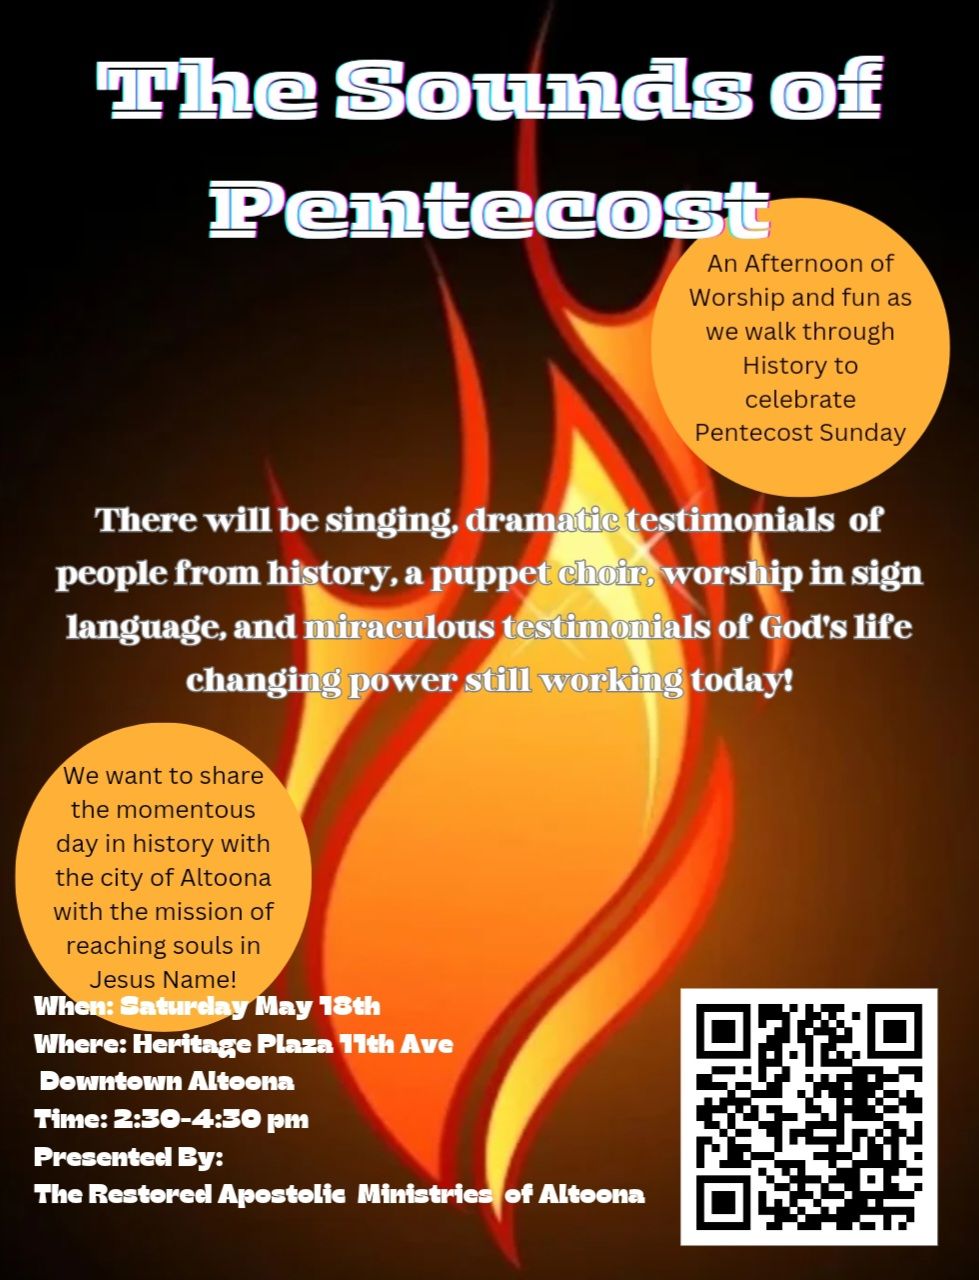 Sound of Pentecost